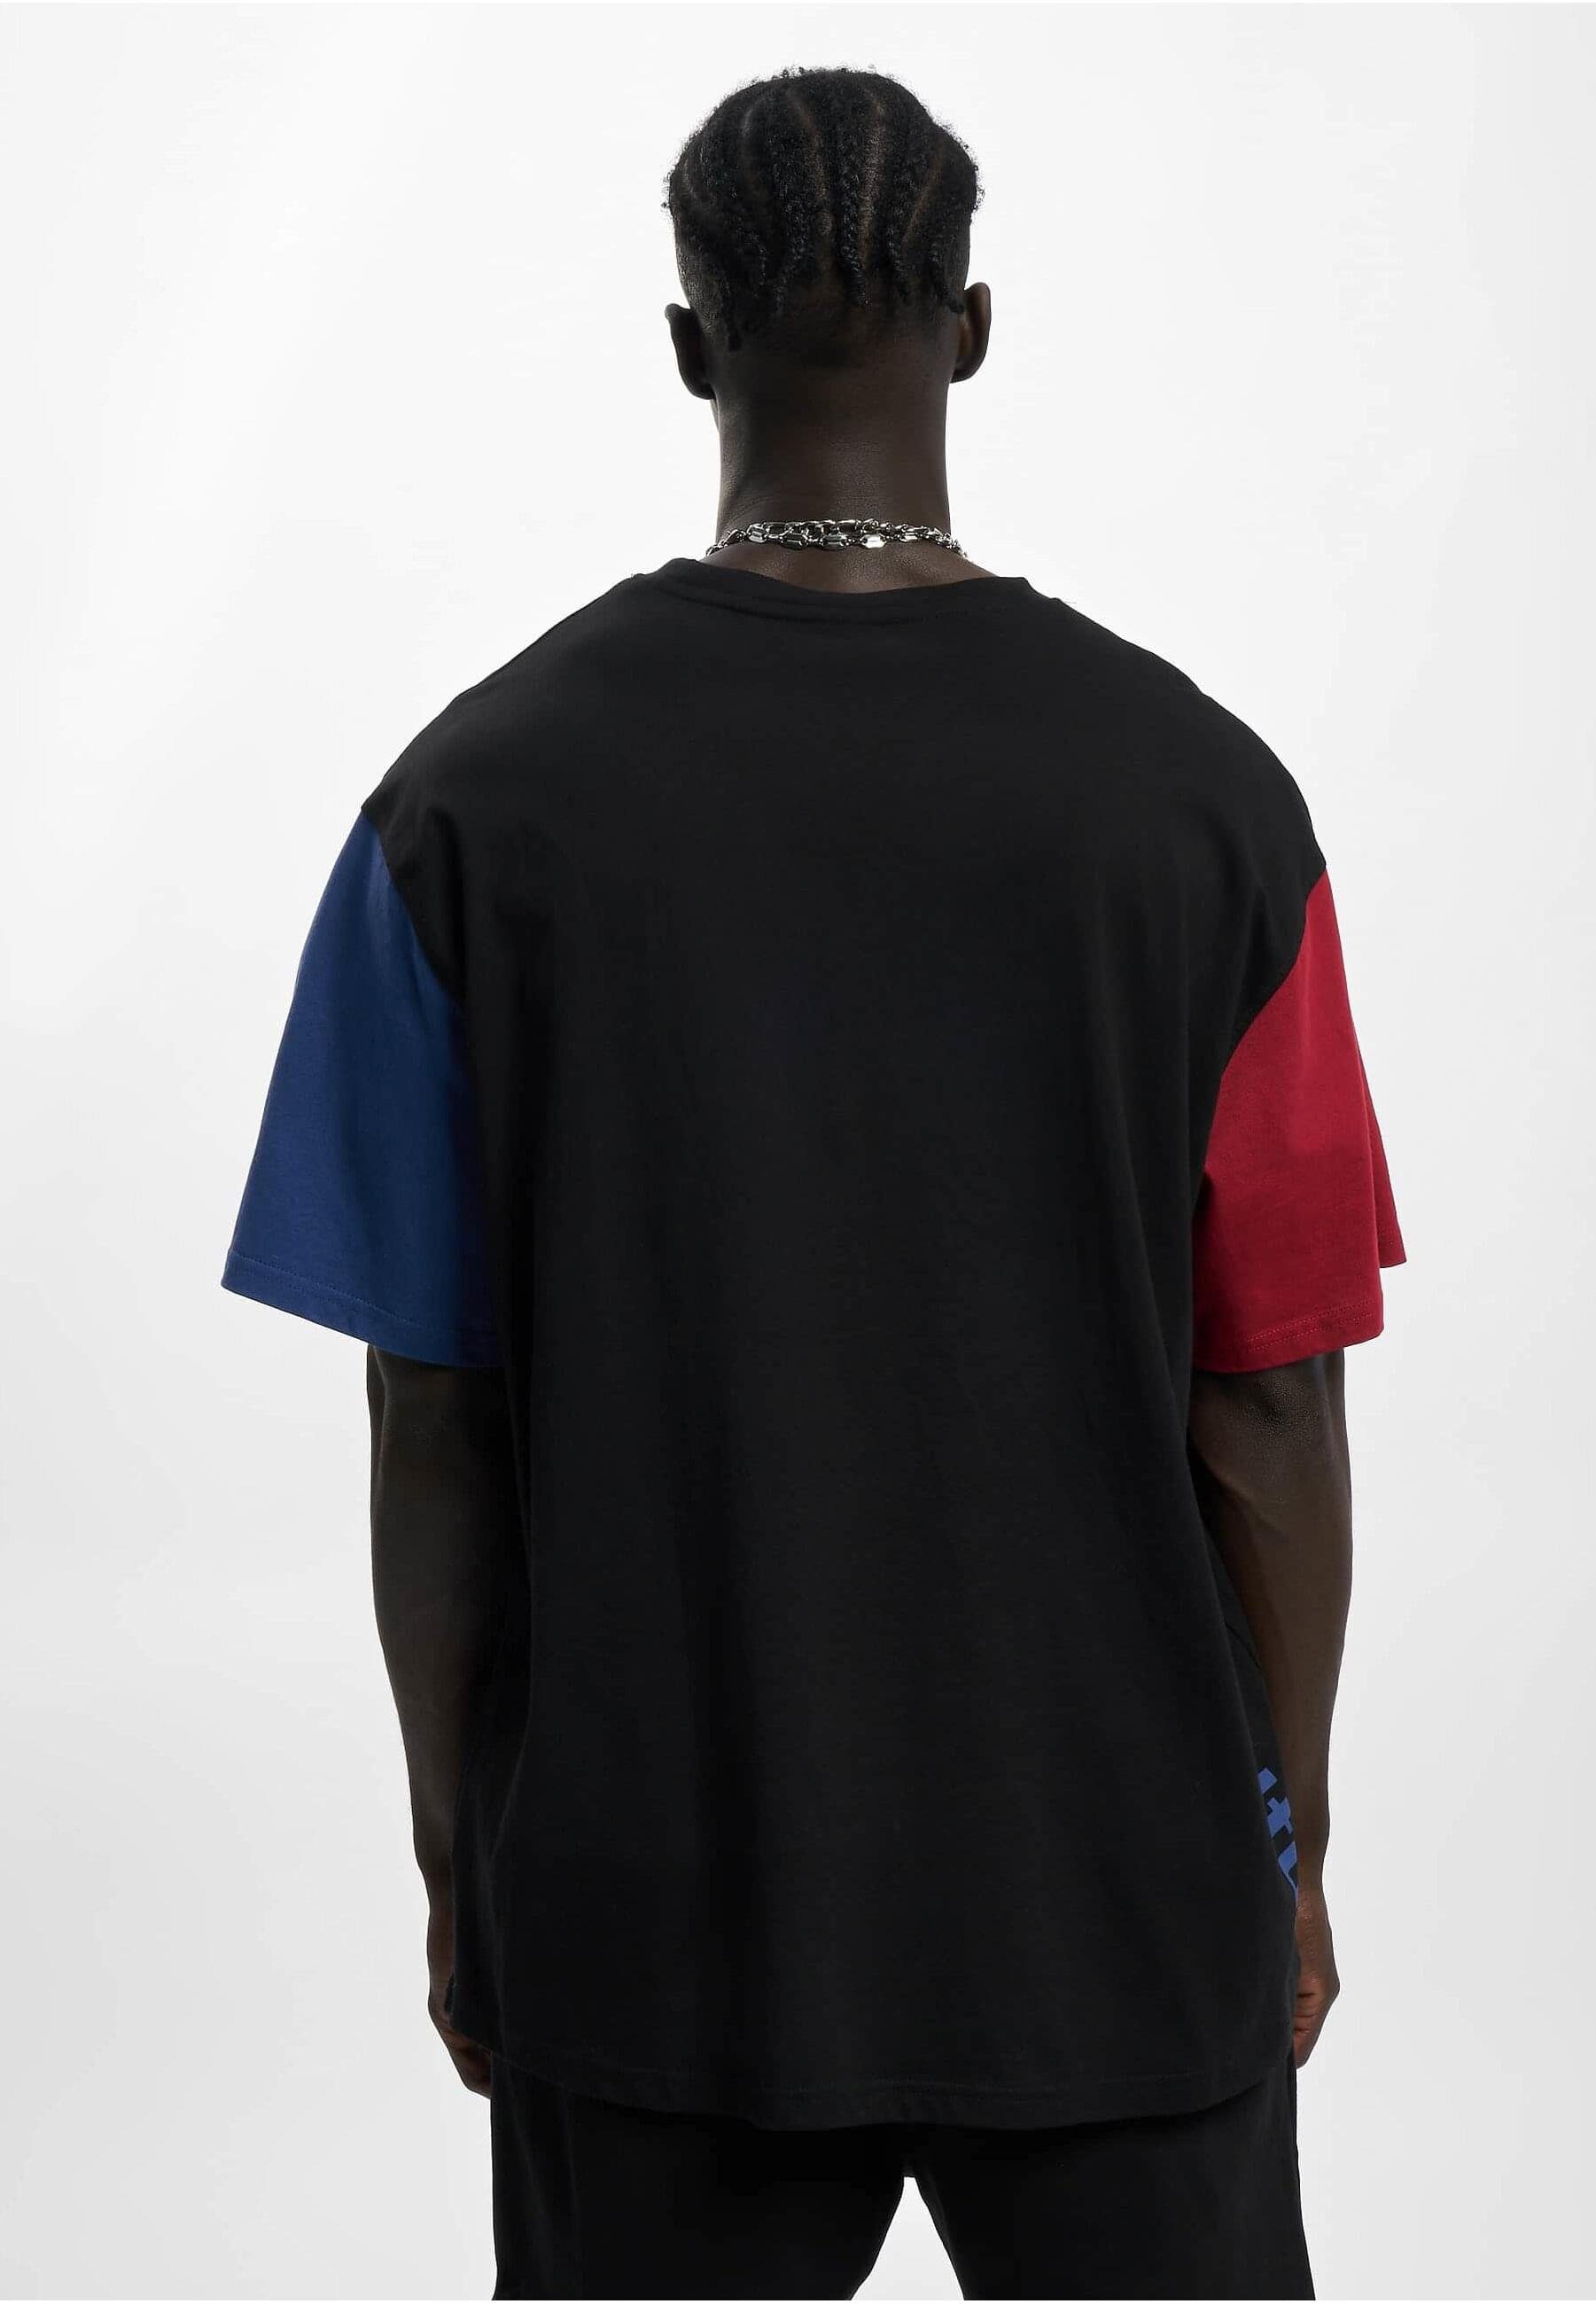 Ecko (1-tlg) Herren Unltd. T-Shirt black/red/blue Ecko T-Shirt Grande Unltd.